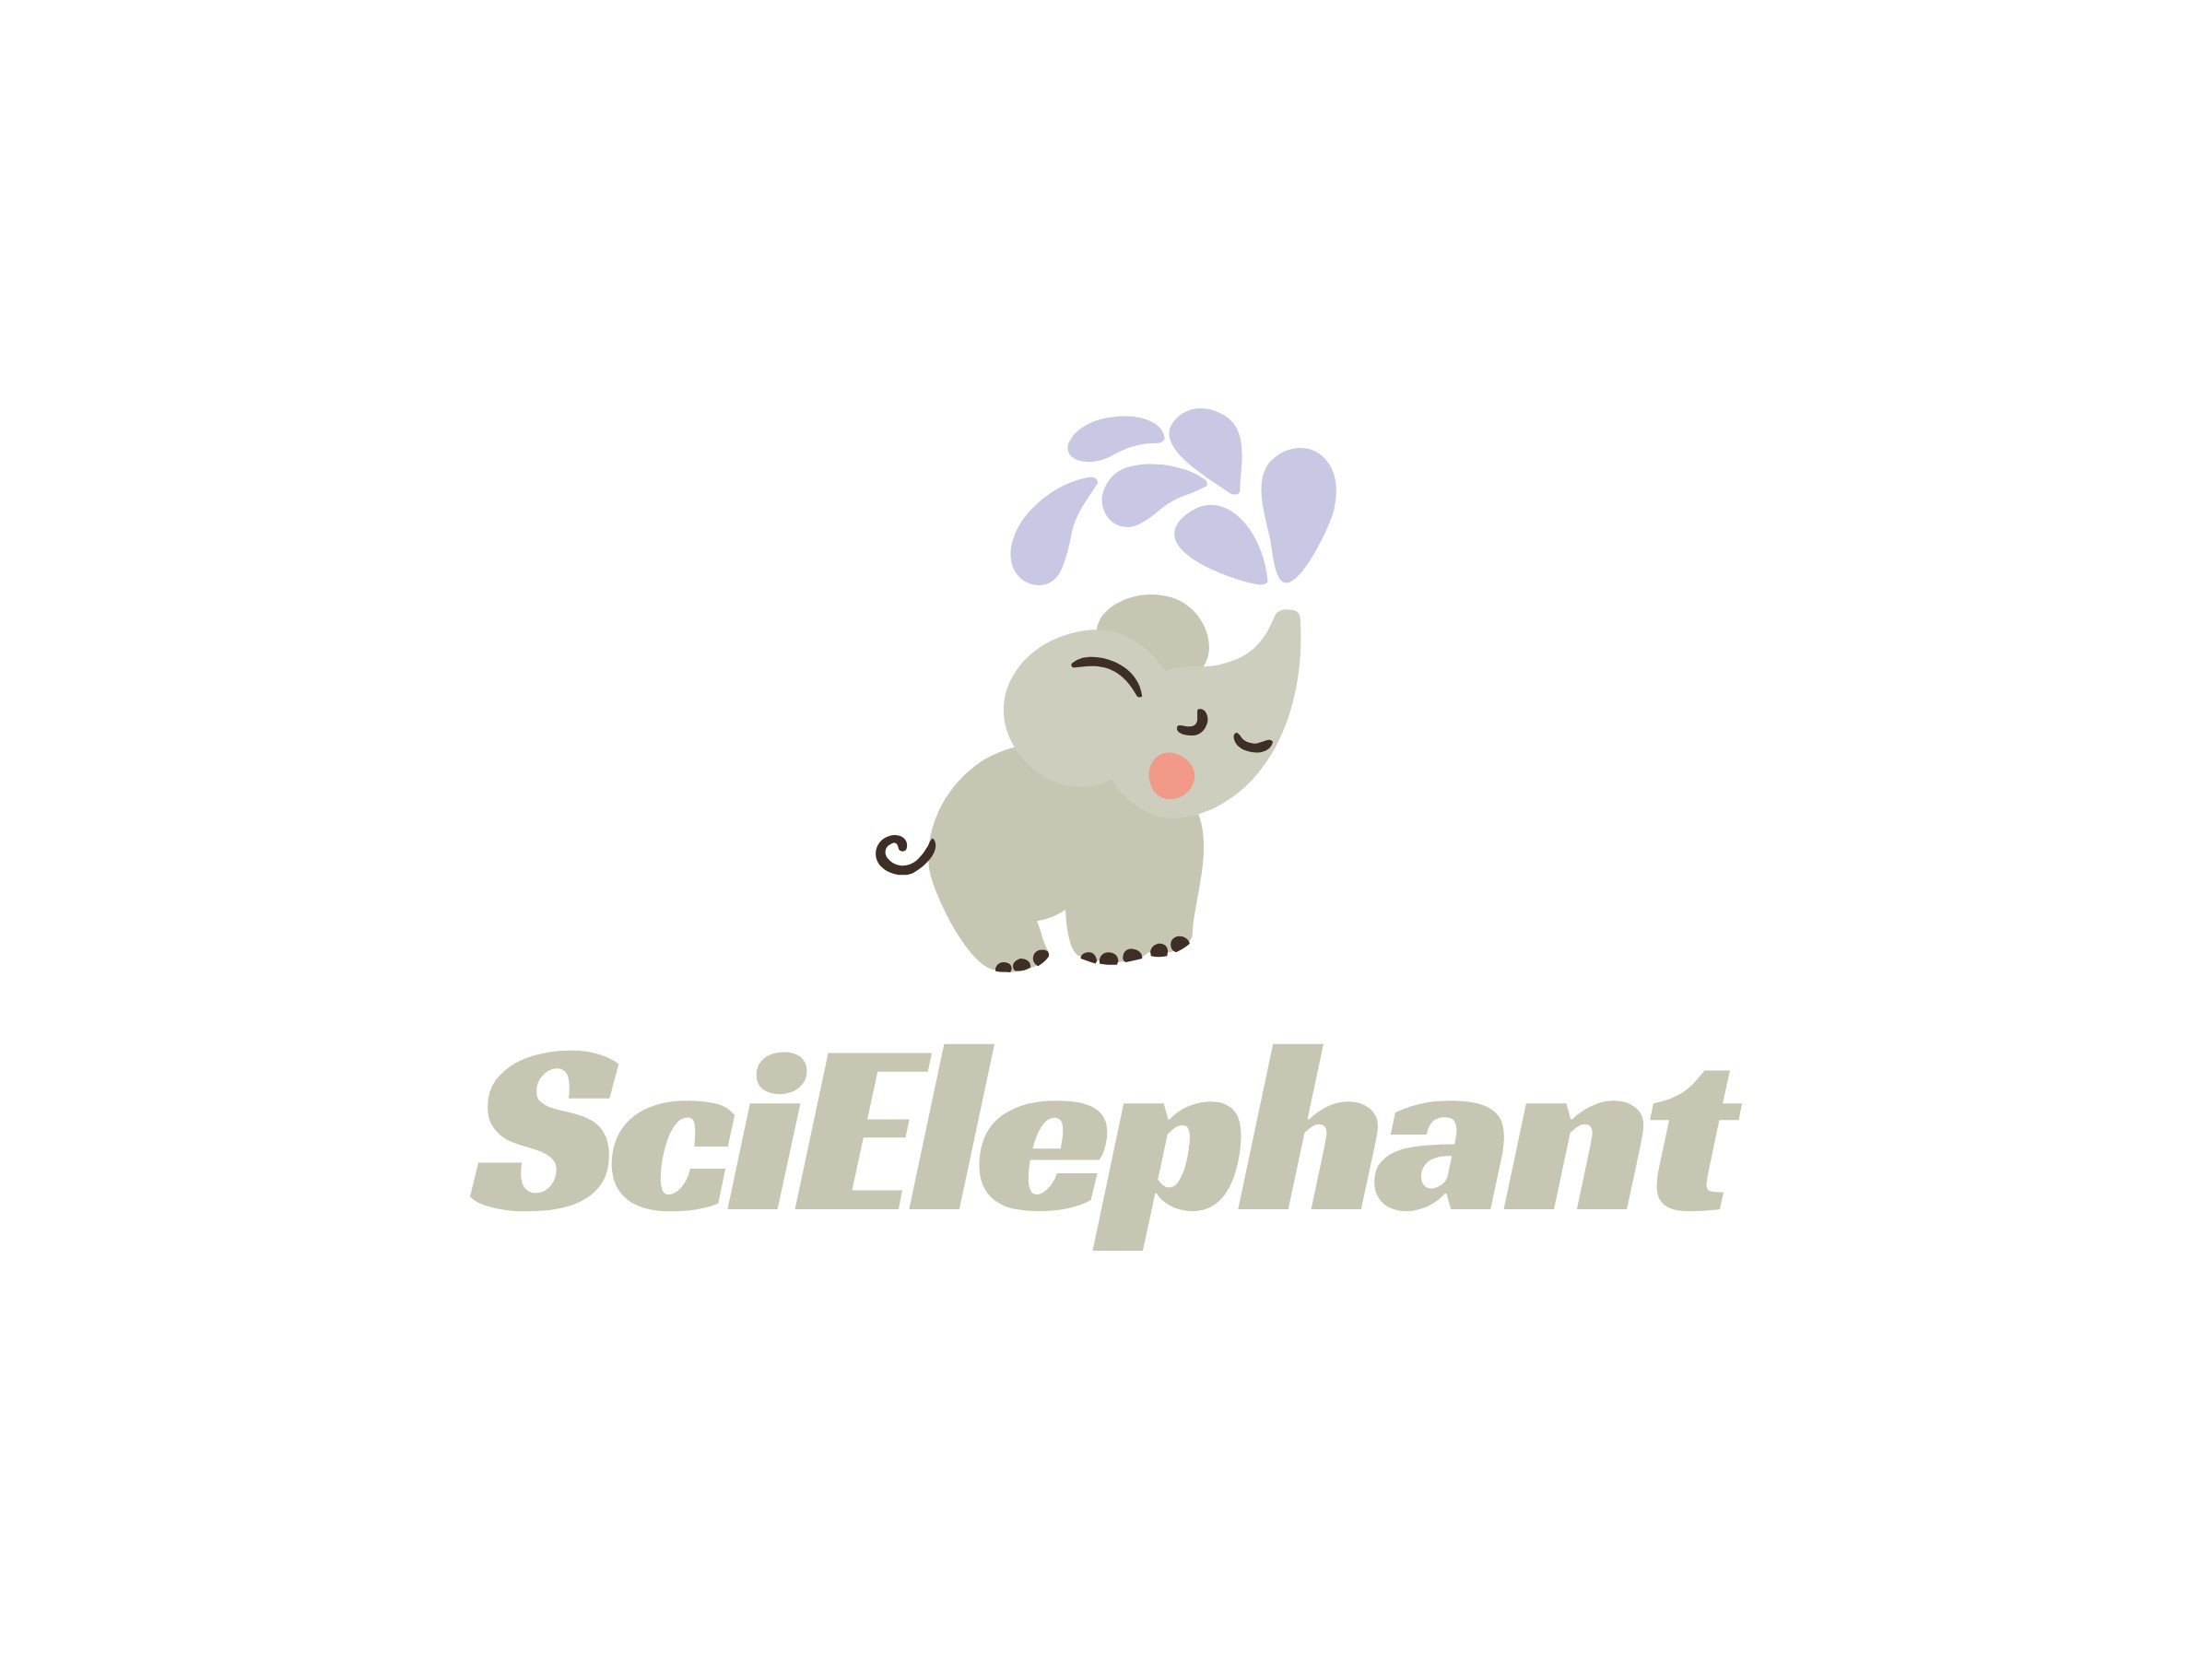 SciElephant - 